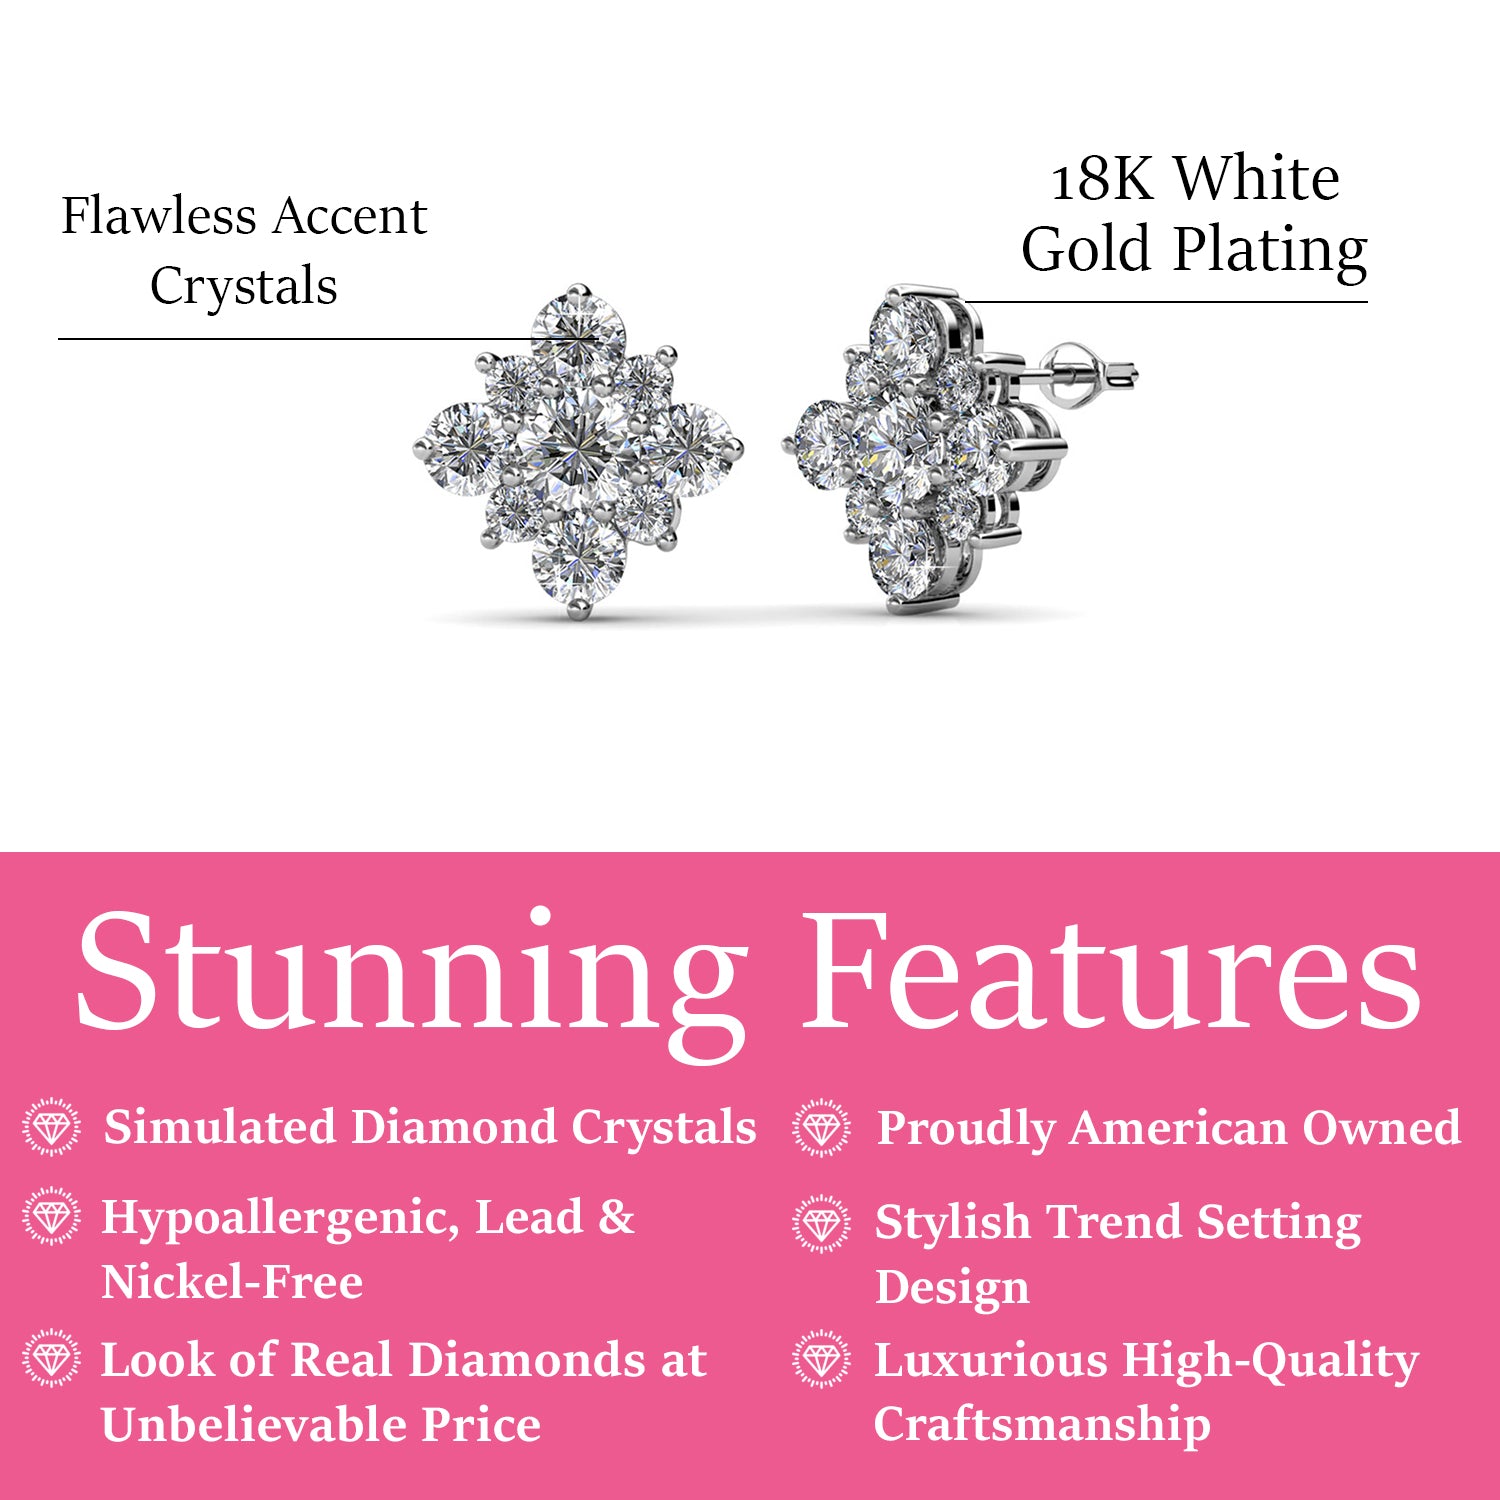 Macie 18k White Gold Plated Cluster Crystal Stud Earrings